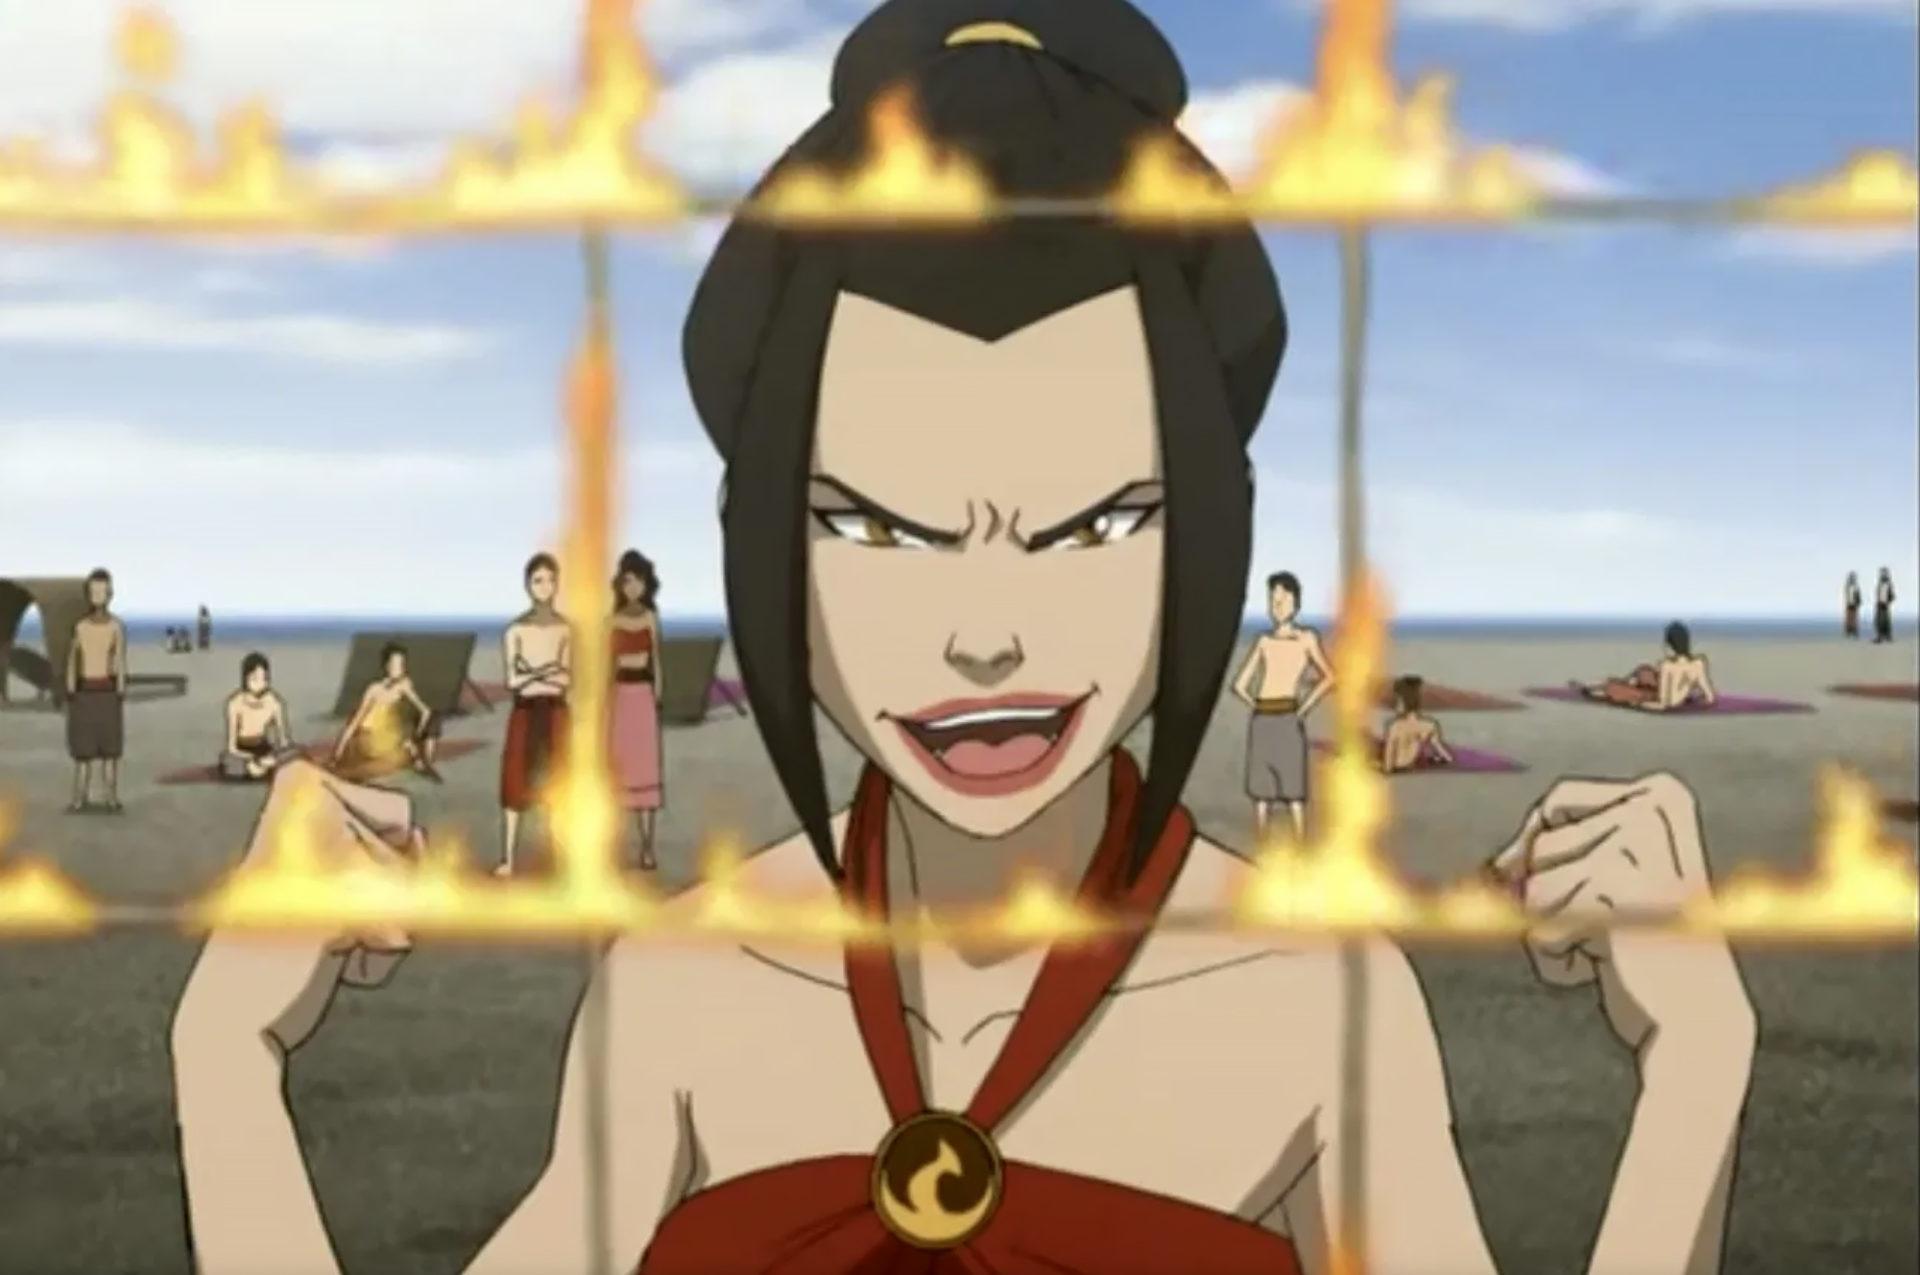 Screenshot of Avatar: The Last Airbender villain Azula burning volleyball net in Season 3.